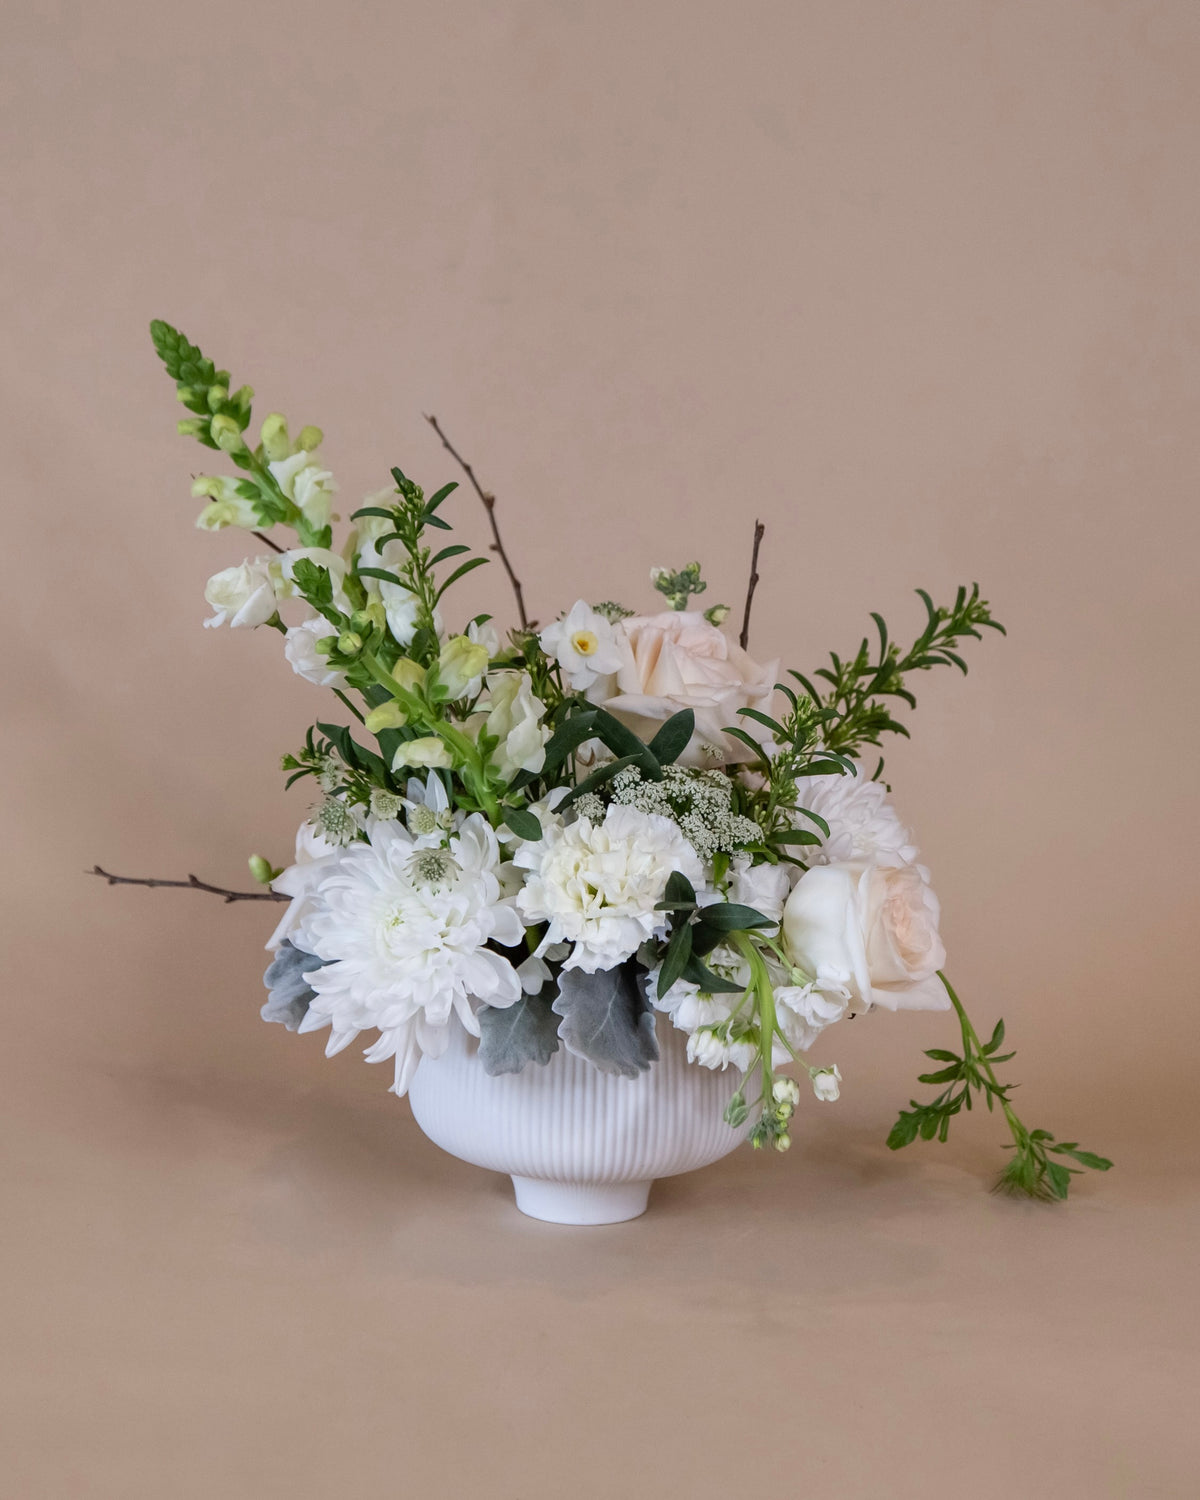 Traditional Sympathy Arrangement in Vase